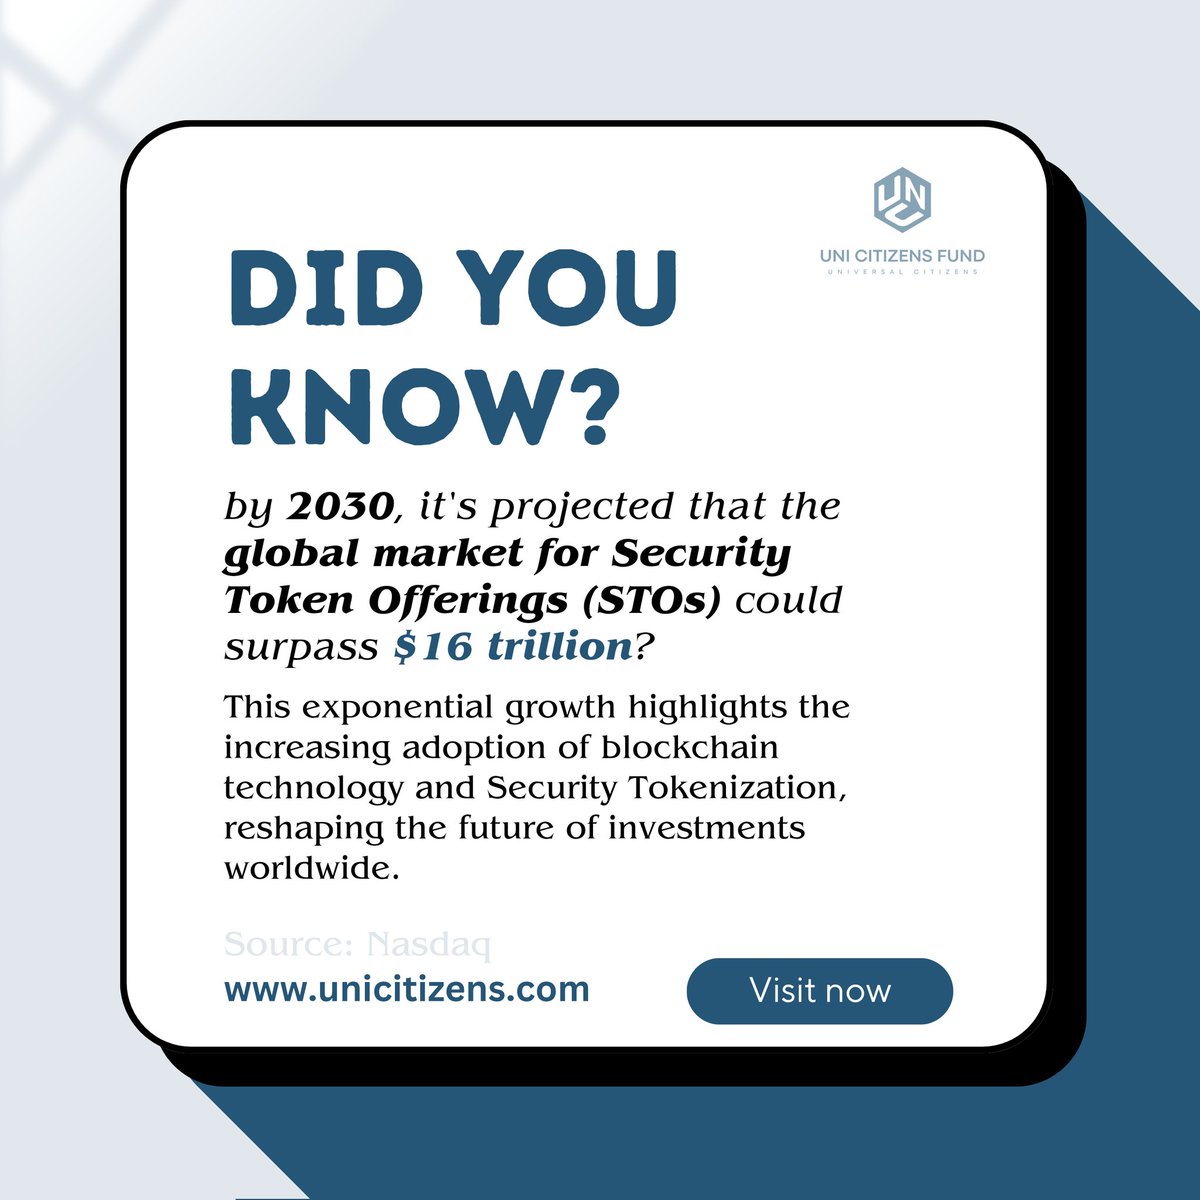 Follow Uni Citizens for more✨️

#unicitizens #news #interestingfacts #16trillion #BlockchainTech #securitytoken #FutureFinance #globalmarket